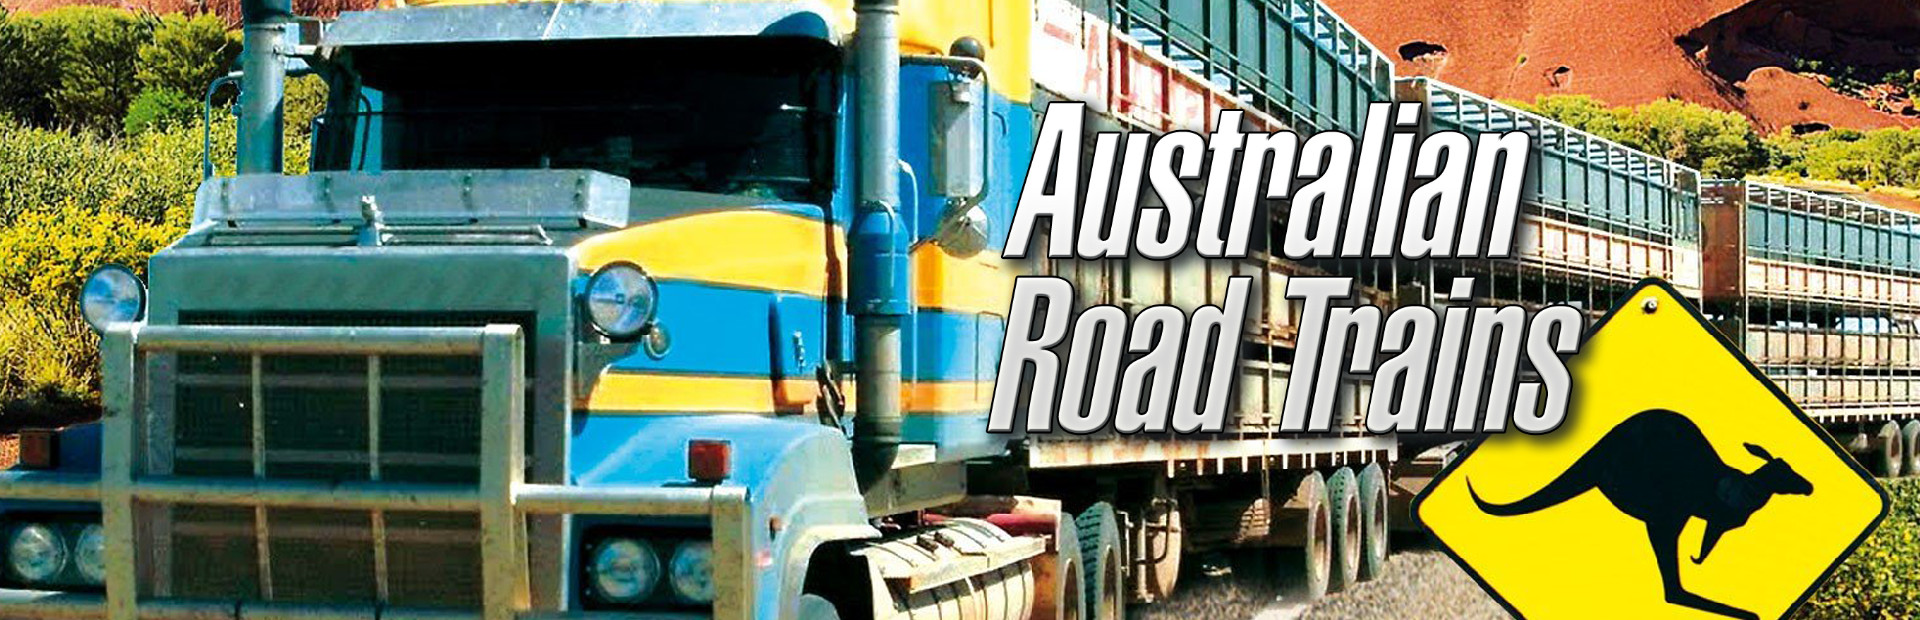 Australian Road Trains cover image